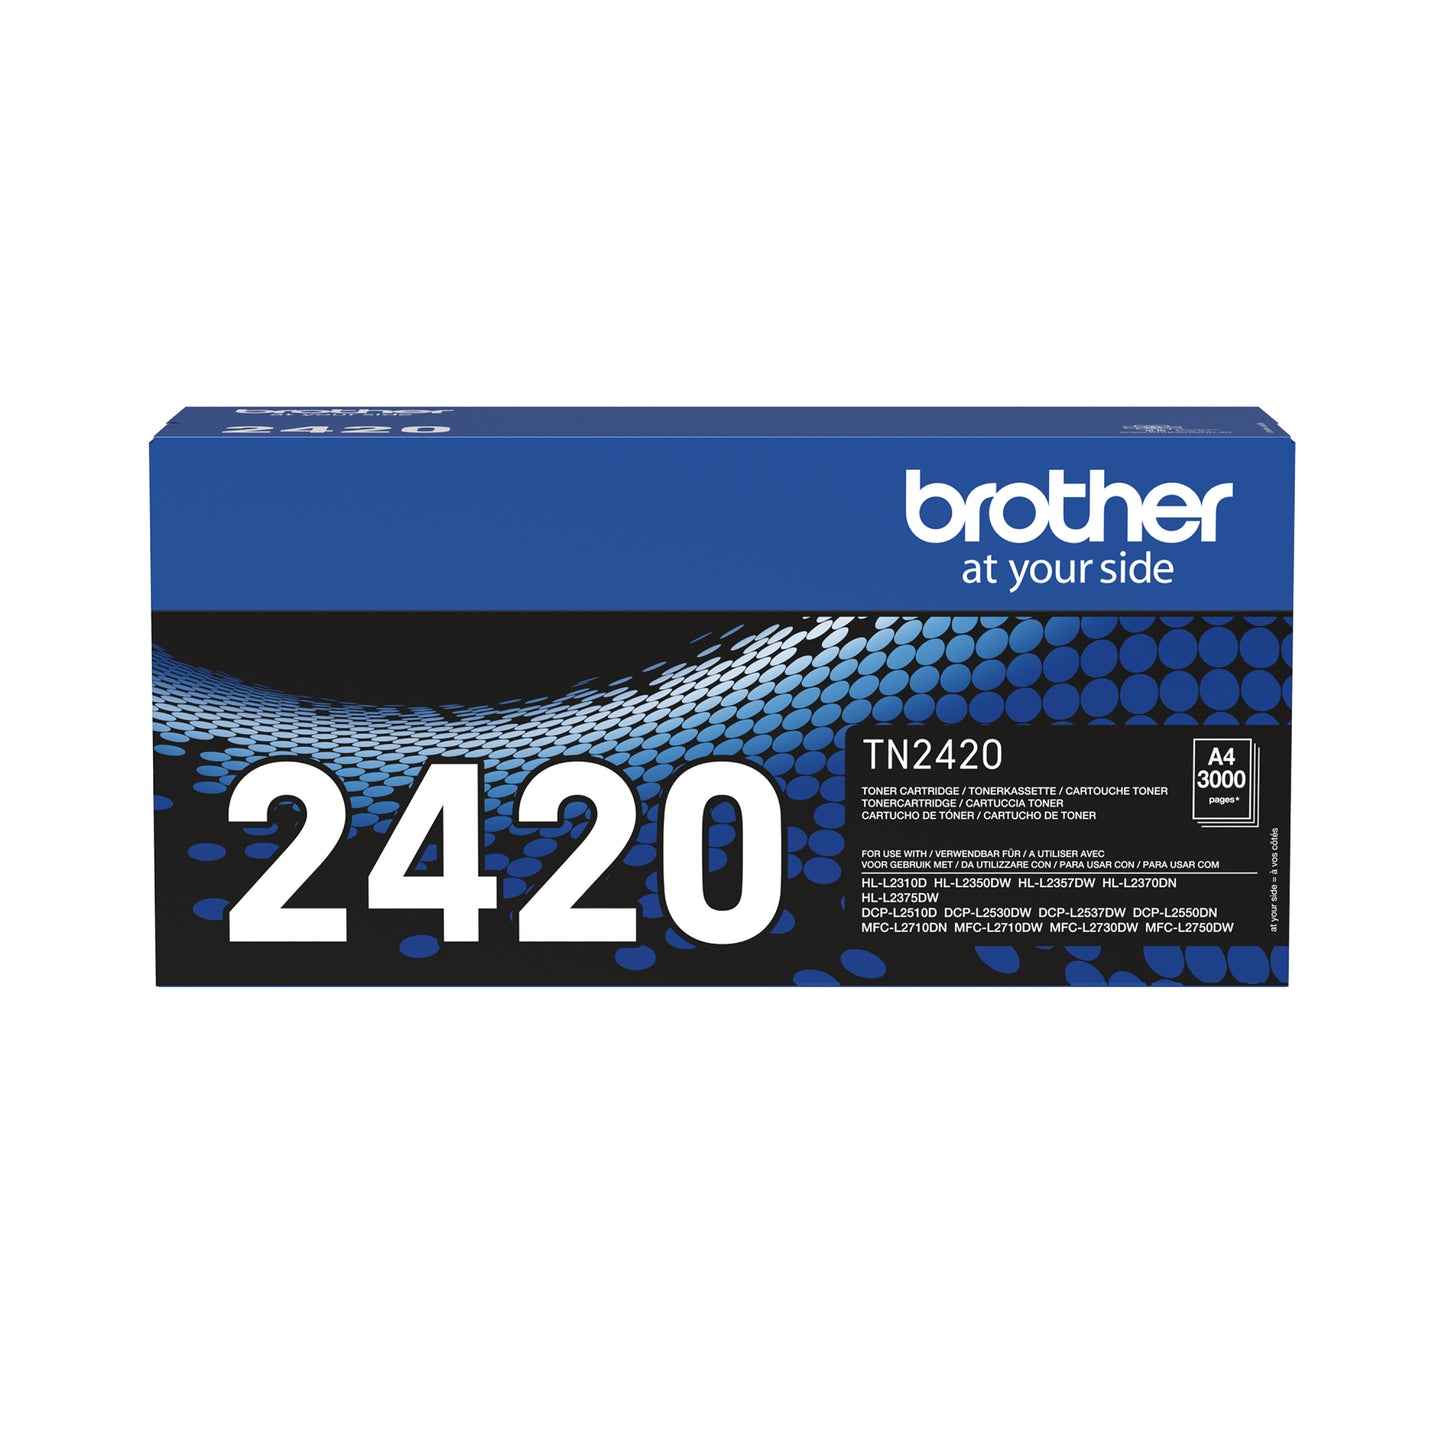 Brother OEM TN-2420 laser toner cartridge